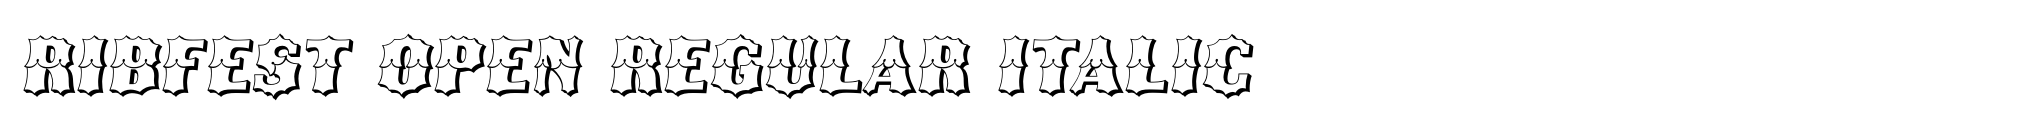 Ribfest Open Regular Italic image